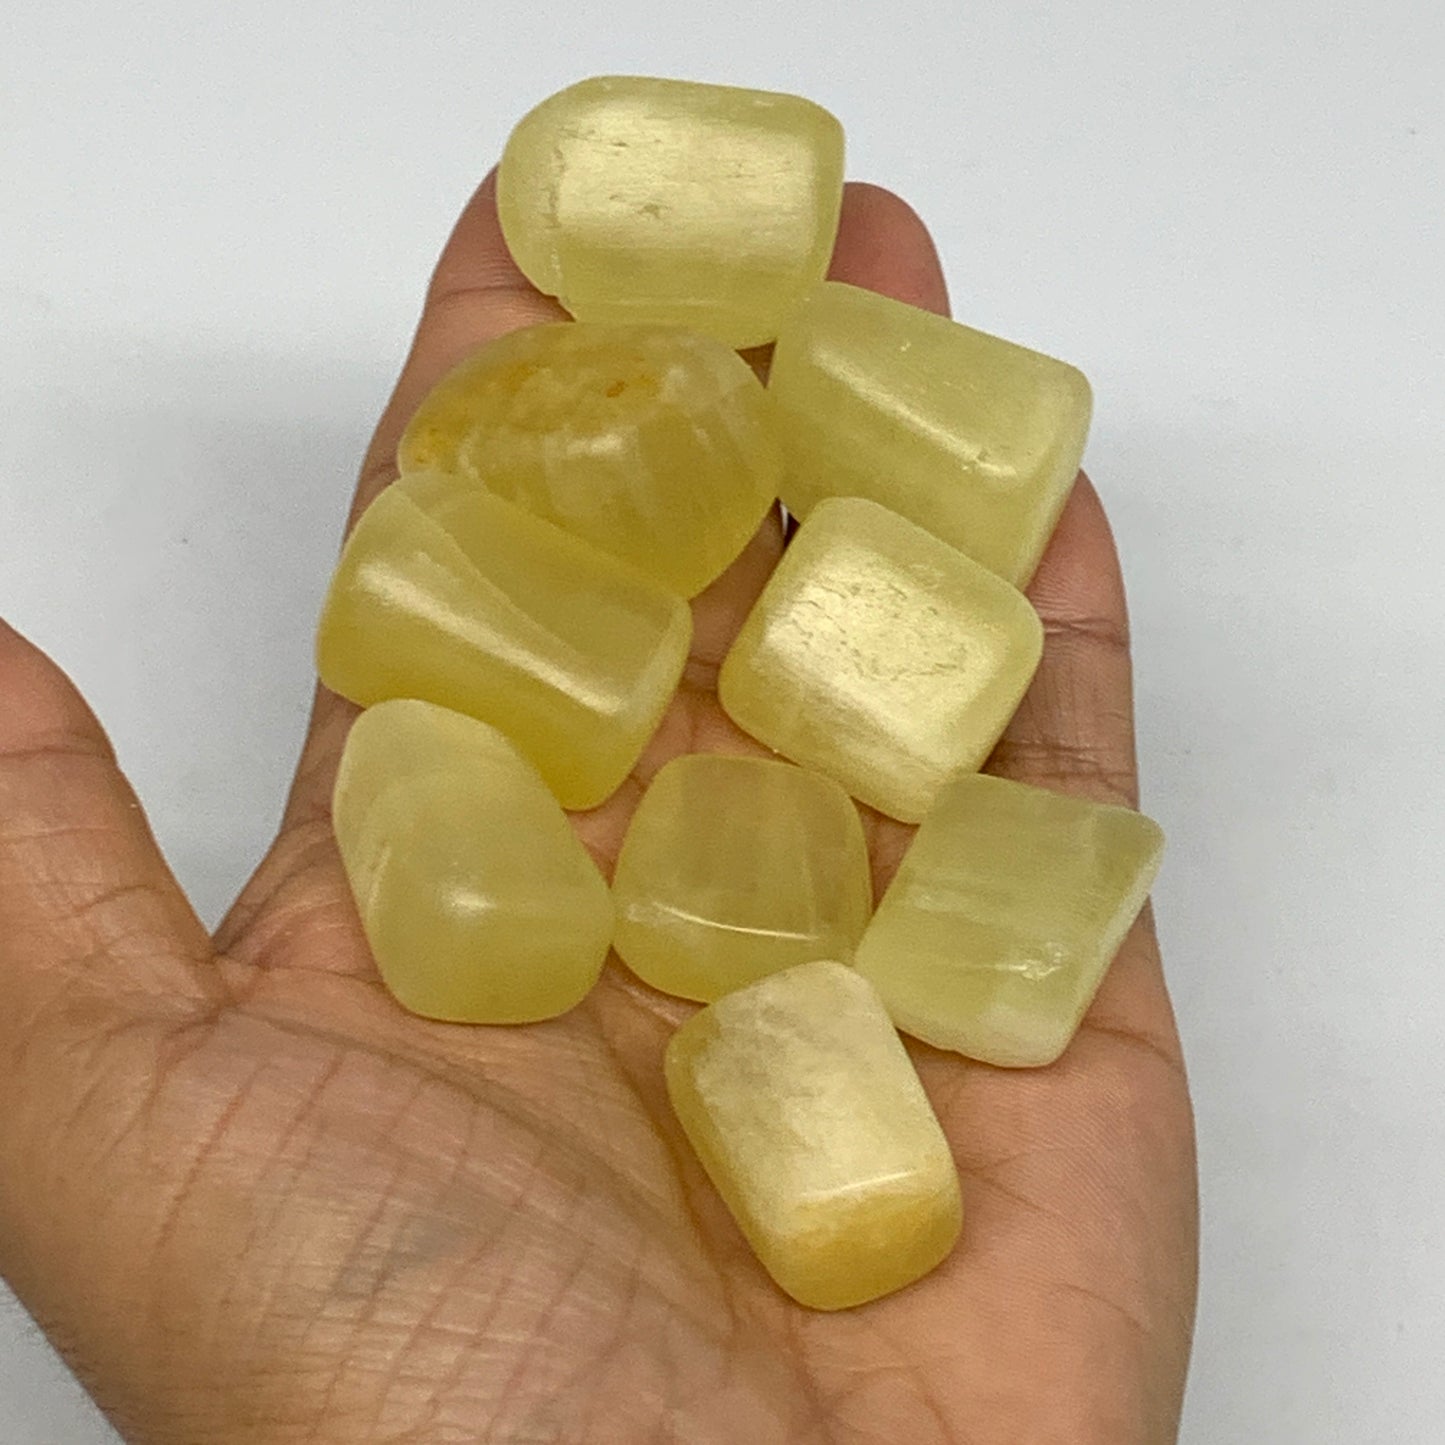 173.6g, 0.9"-1.2", 9pcs, Natural Lemon Calcite Tumbled Stones @Afghanistan, B267